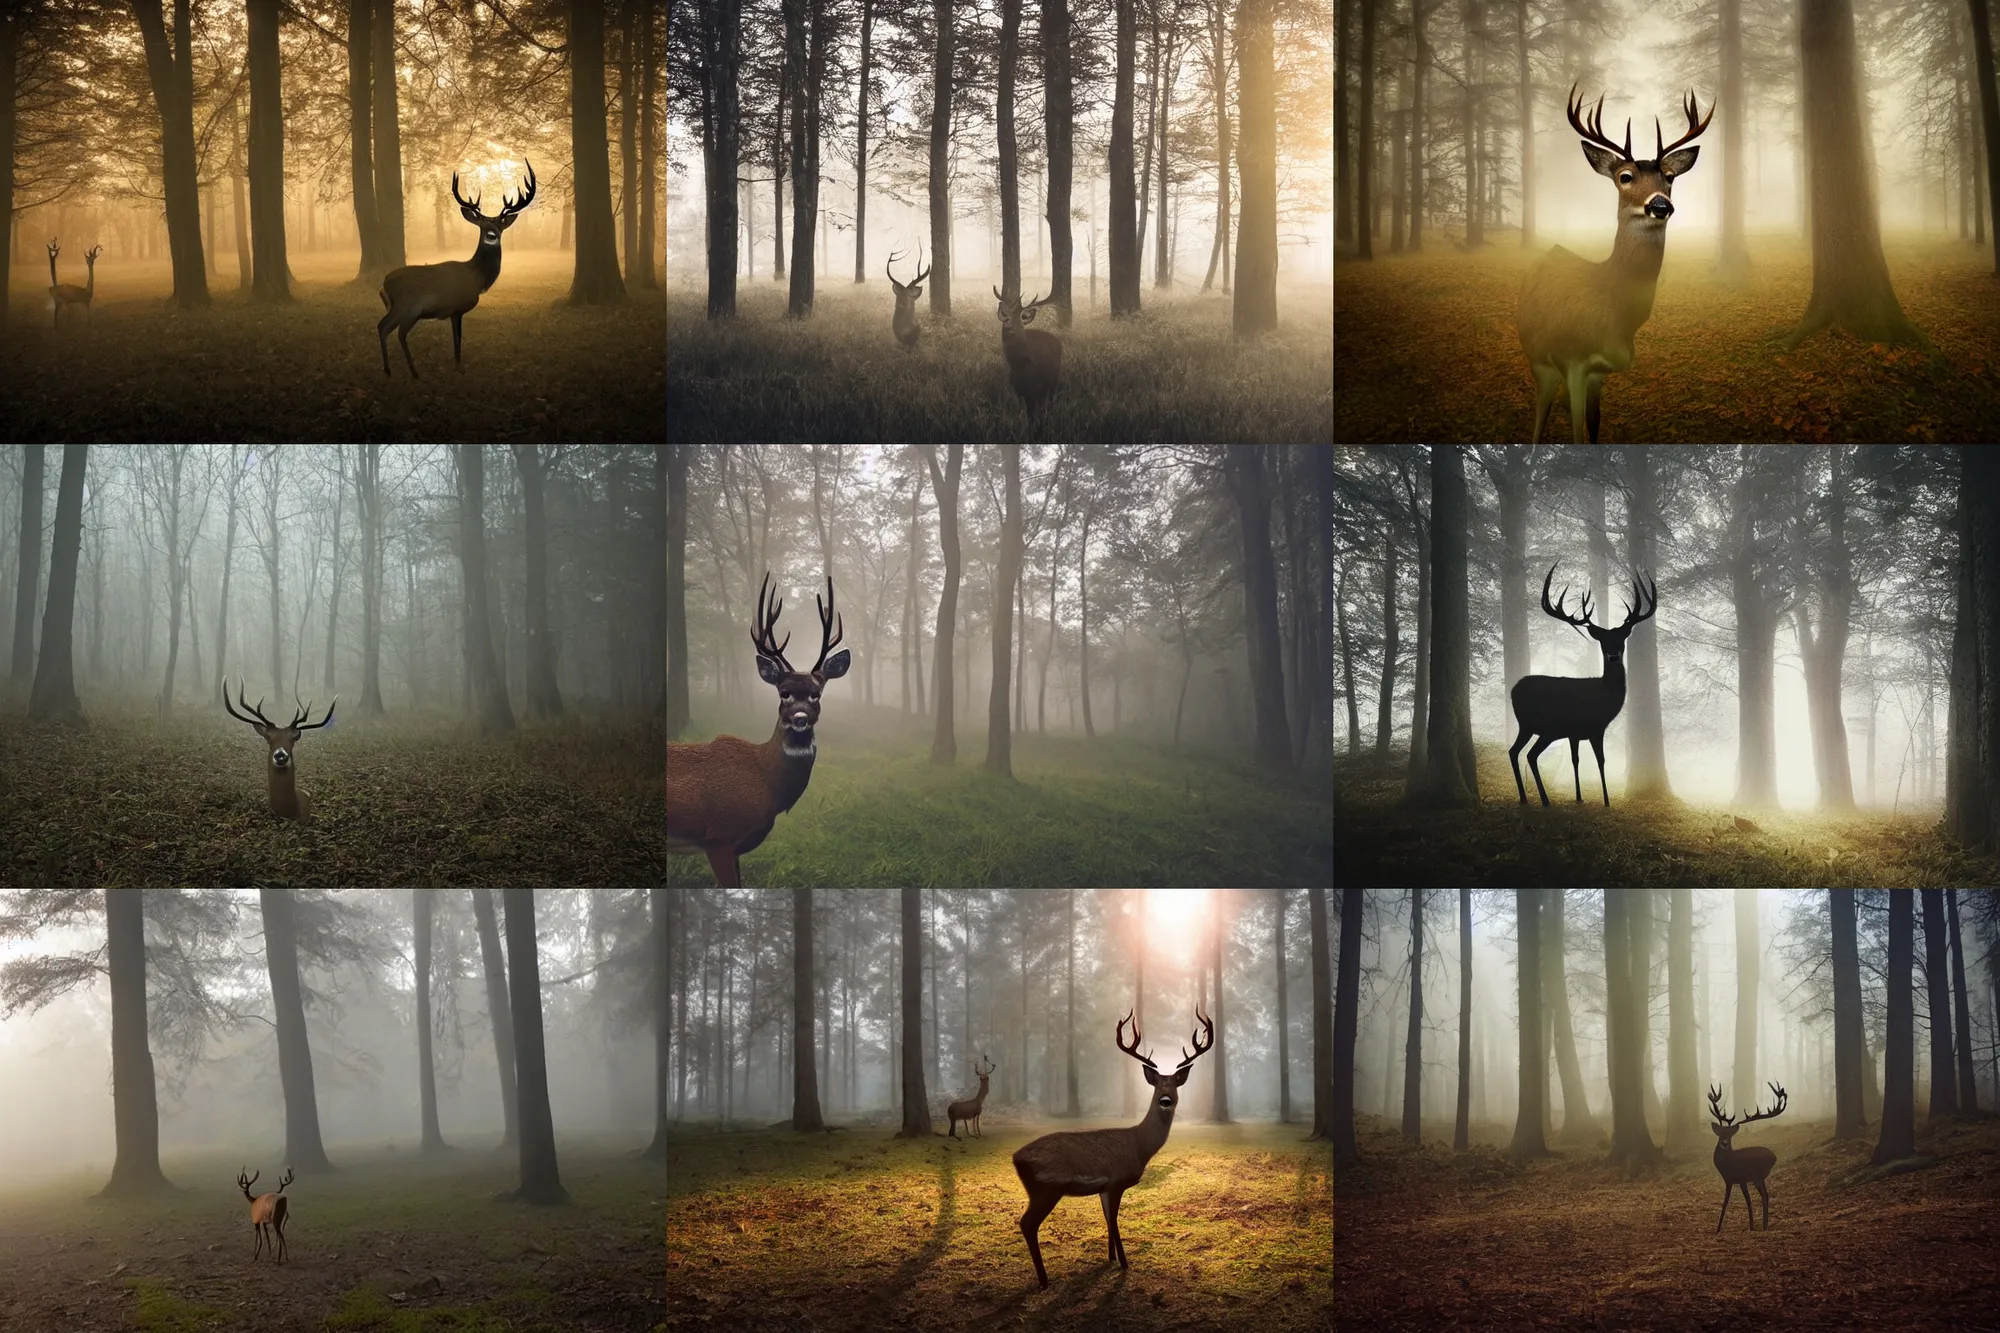 Prompt: deer portrait, facing camera, demon eyes, glowing eyes, landscape, misty forest scene, sun through the trees, surreal